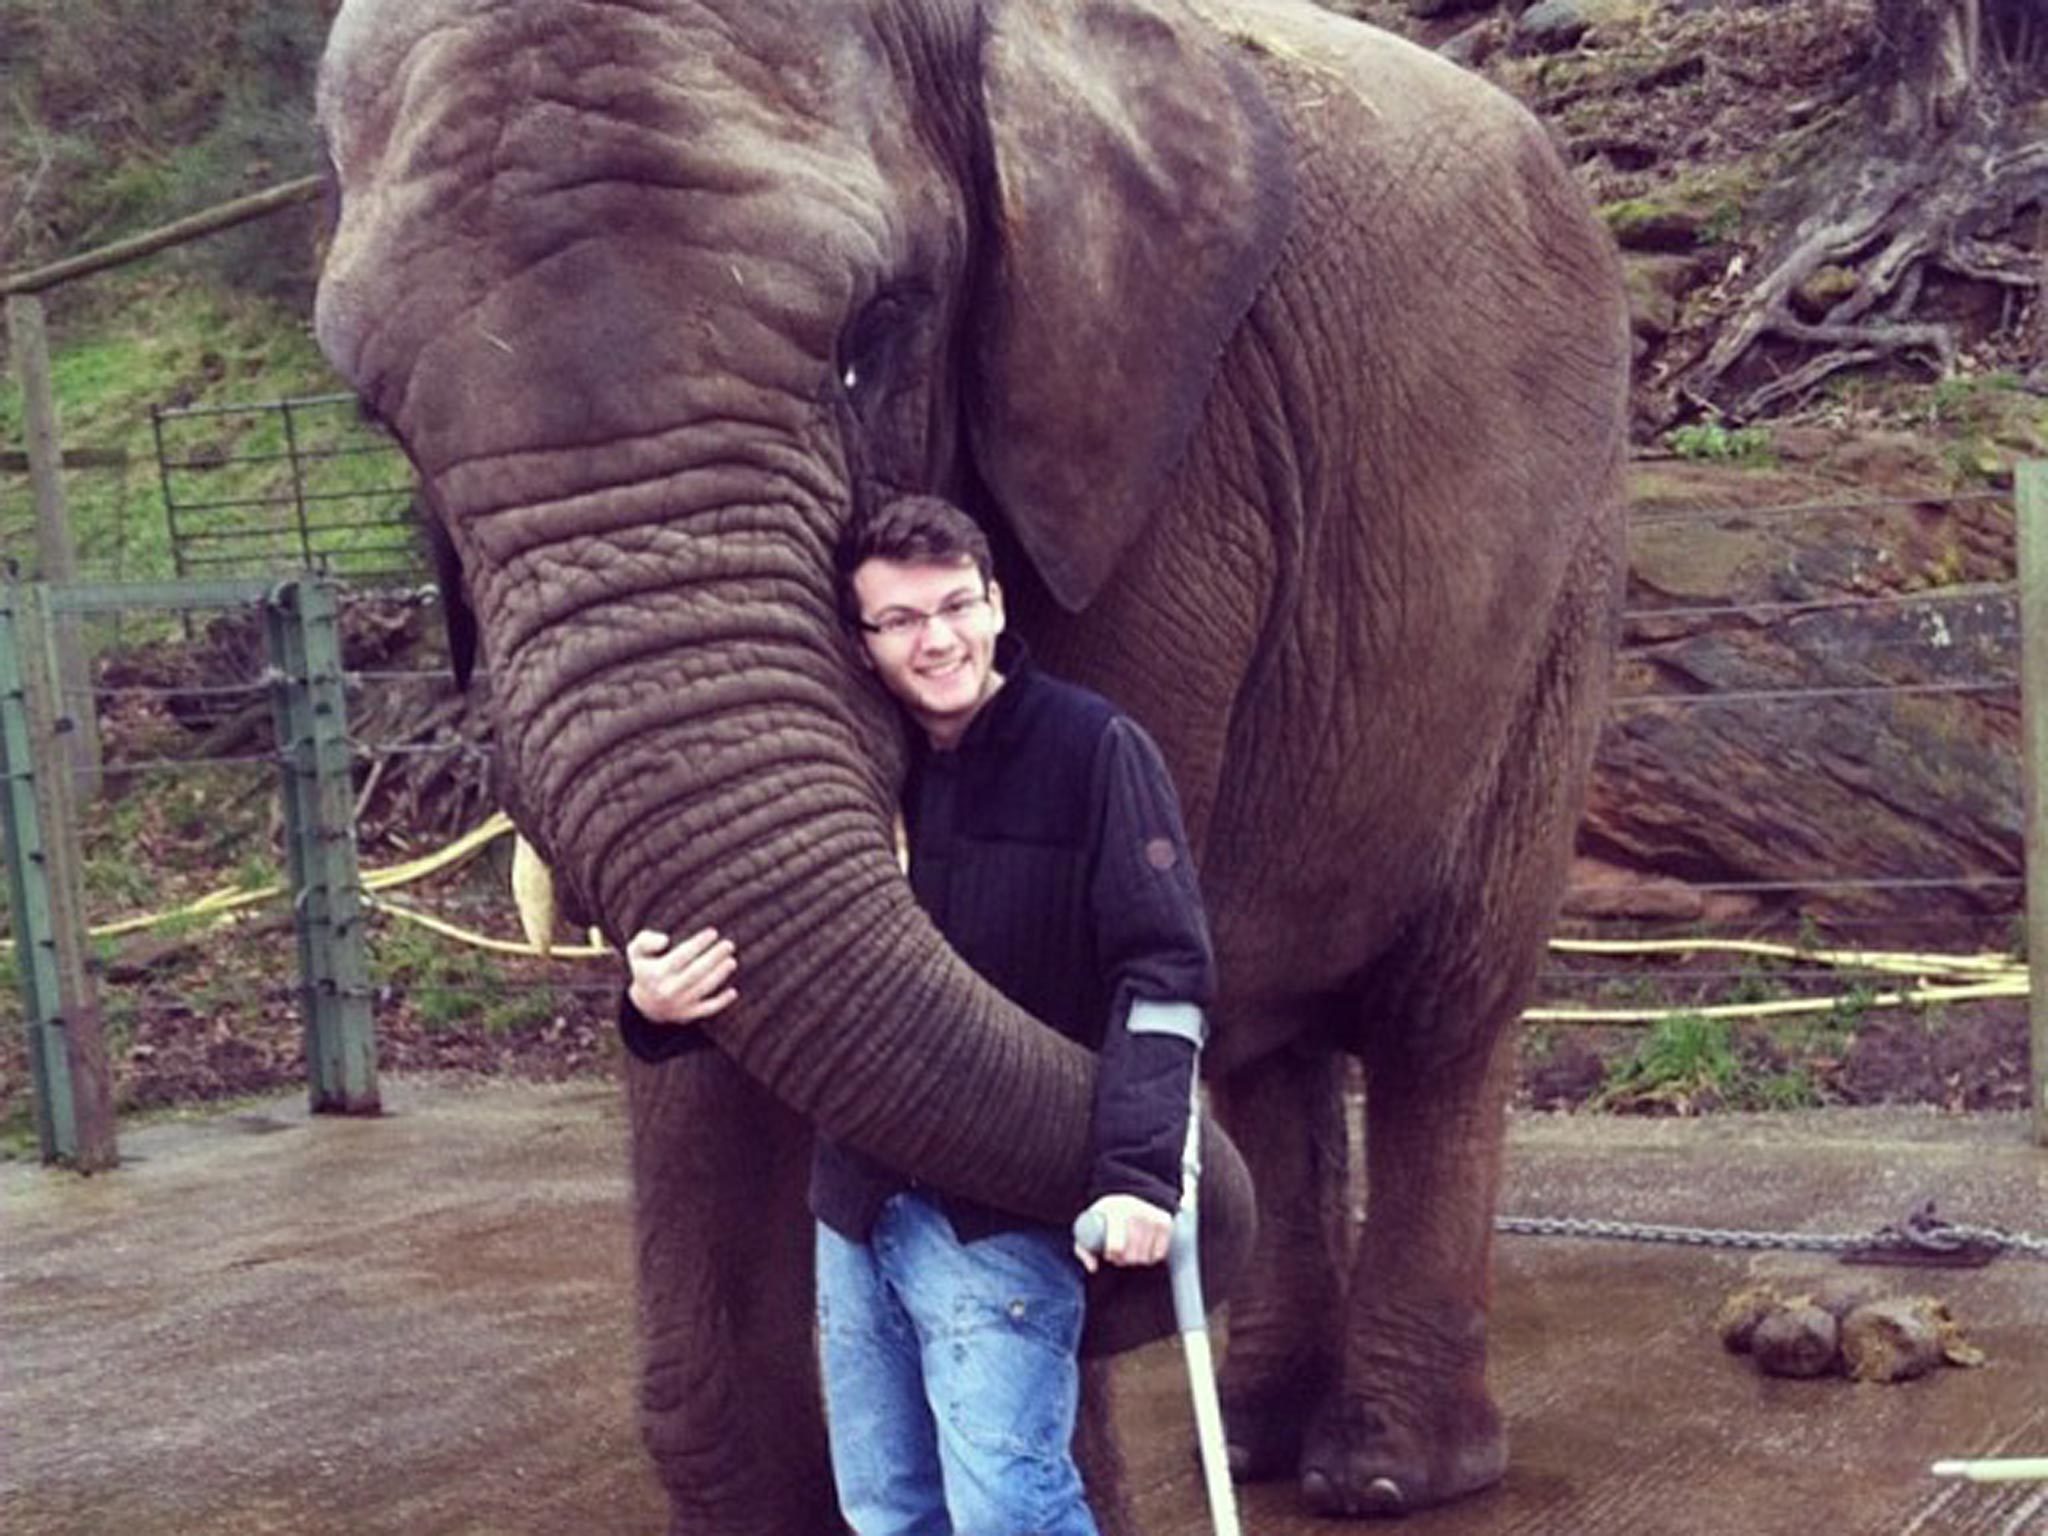 Sutton hugs an elephant – one of the items on his
bucket list